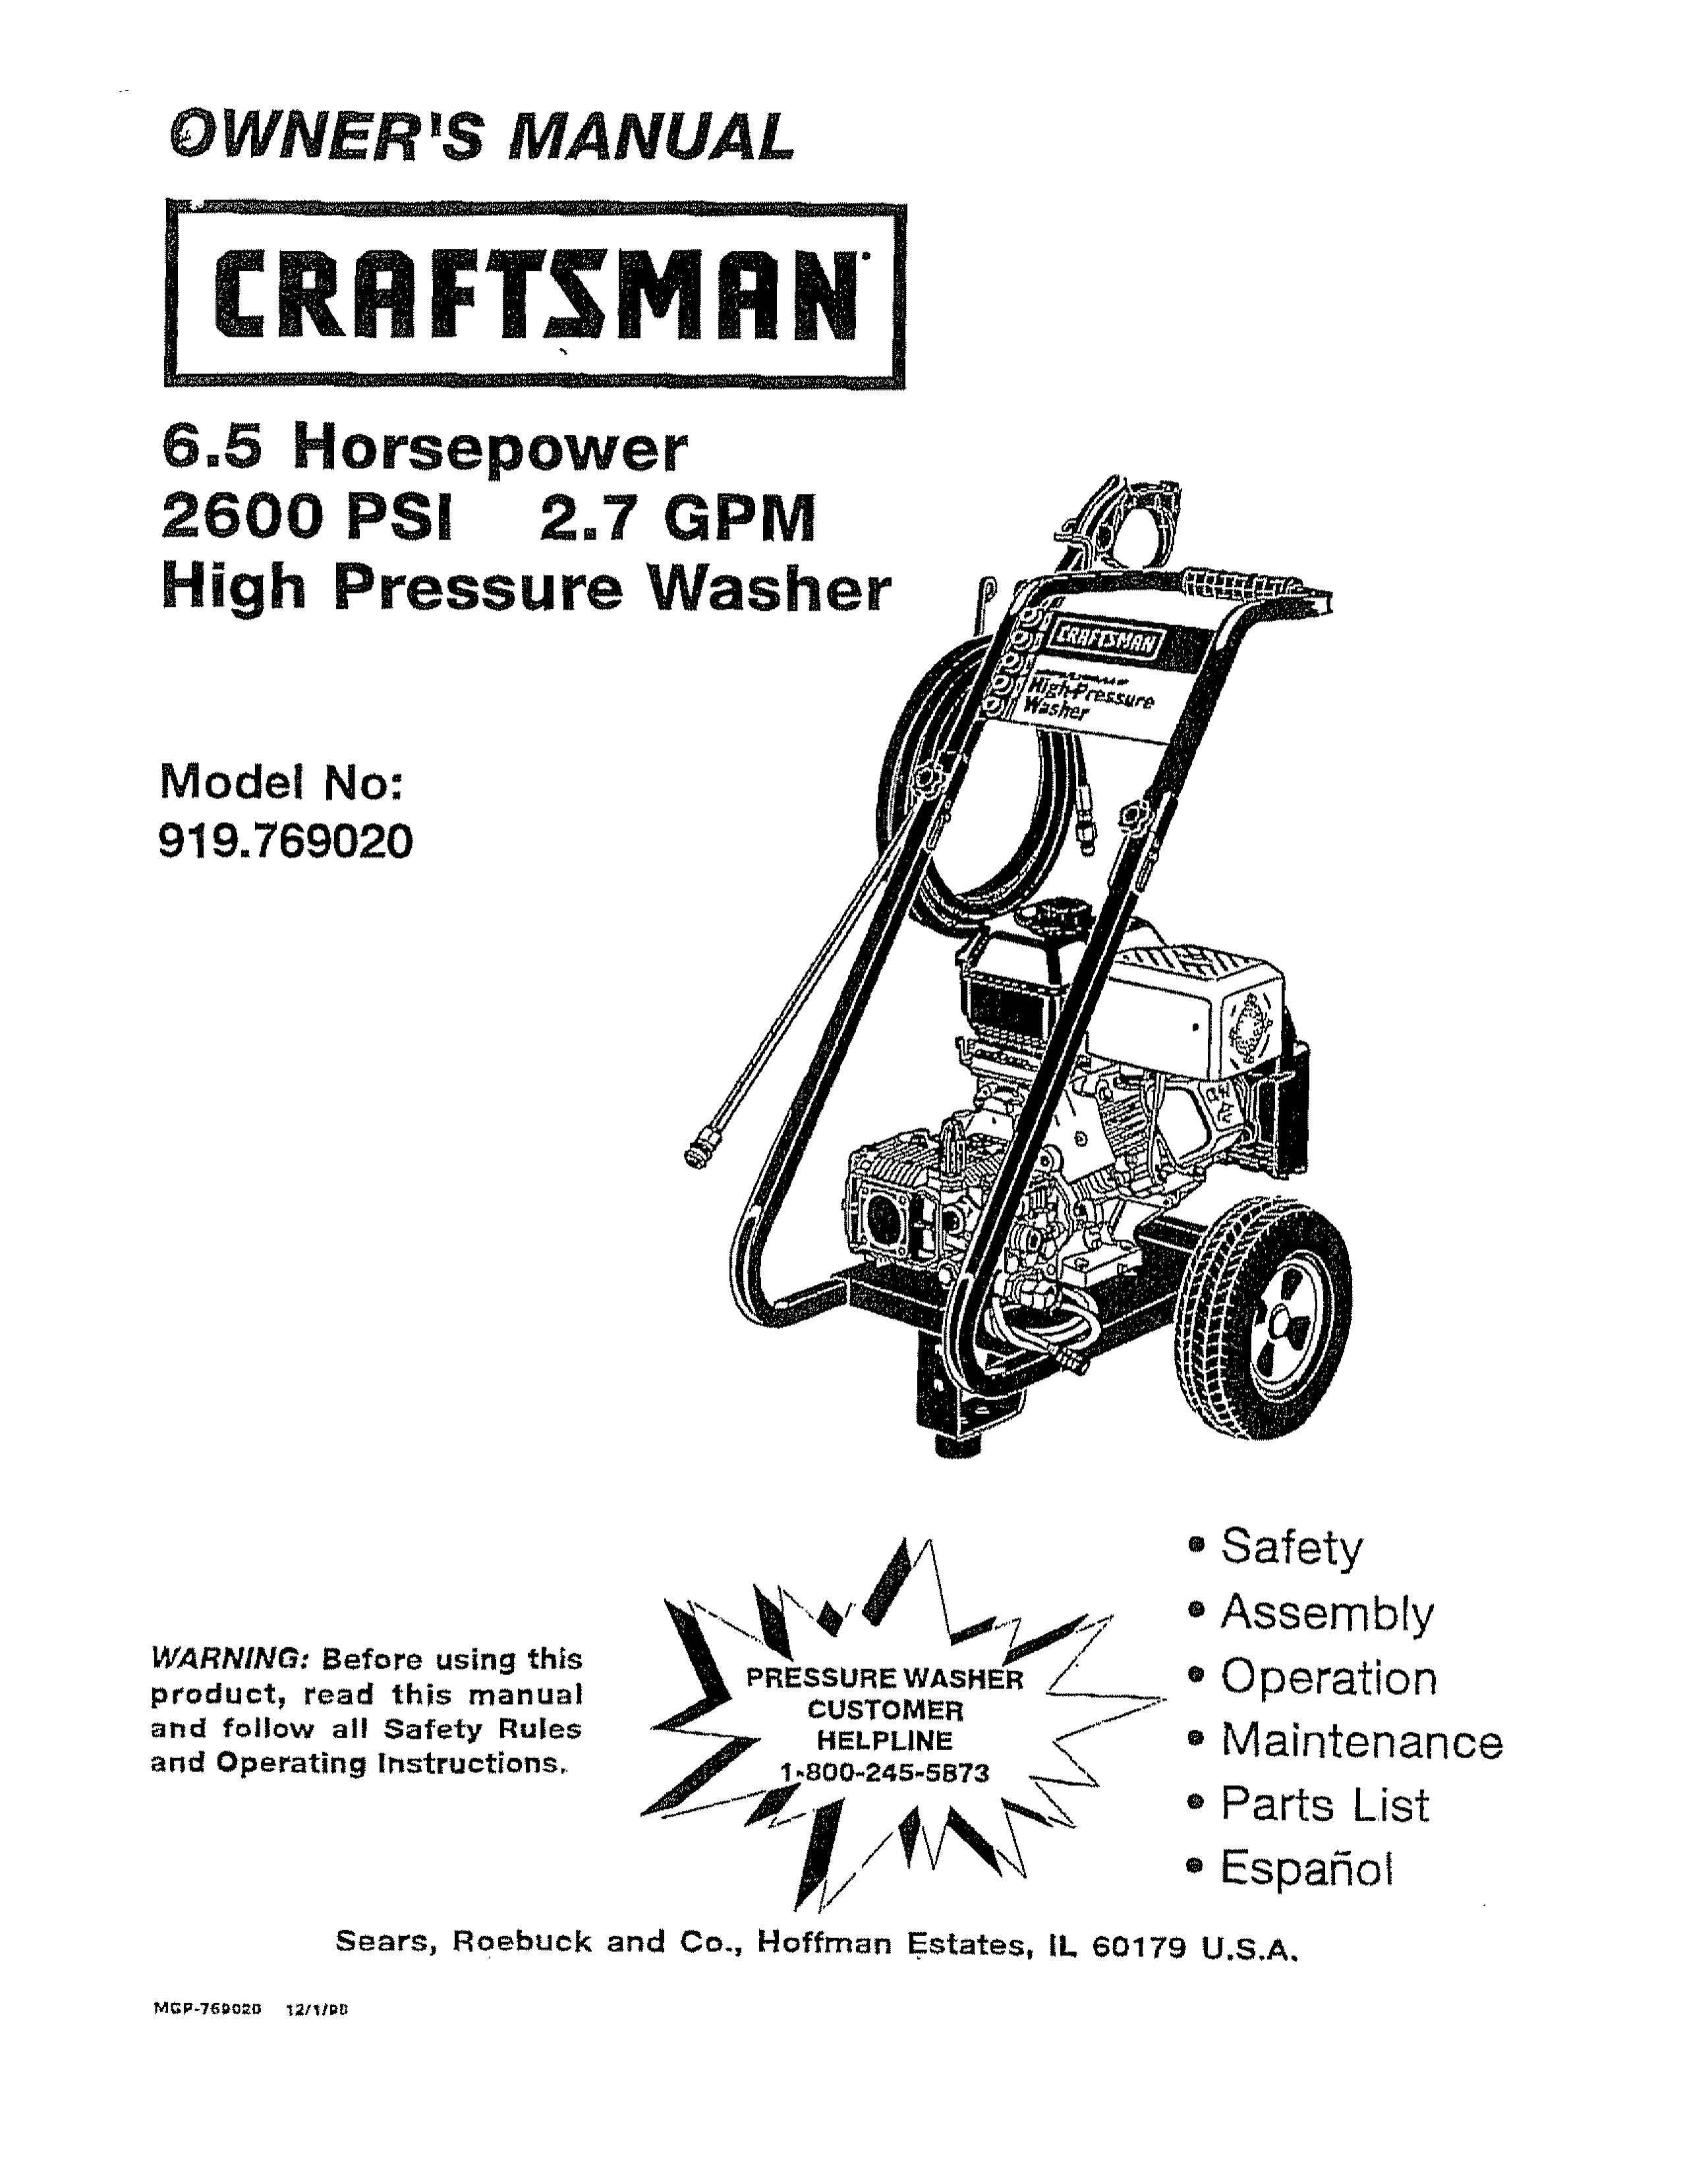 Craftsman 919.76902 Pressure Washer User Manual